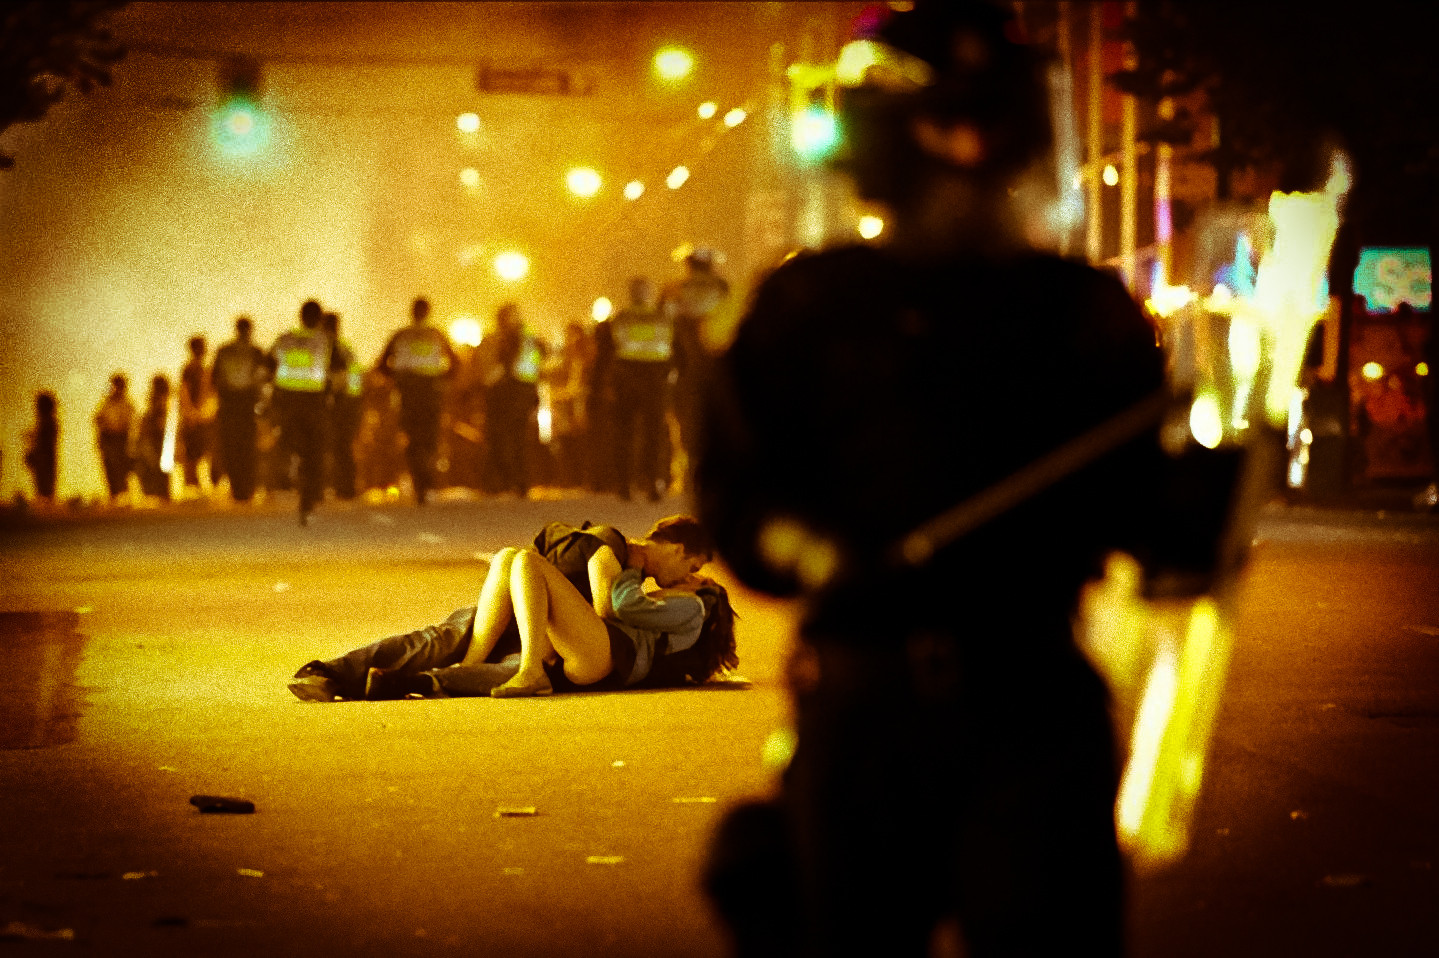 https://blogger.googleusercontent.com/img/b/R29vZ2xl/AVvXsEjxD7mKIDGBwVl5-AHaZu_msnA7e9CaQ_R617rlIwRkv1pzWdJGwN5iCq9kQyEc9DSxKVXabnmJwfWkomtNUAUloHaCK7iOgvsidvQJByyYxPpDk2lHpW2LxbctmxOzFF1Zeb0tveJsUrw/s1600/Vancouver+Riots+Couple%252C+Vancouver+Lovers%252C+Kissing+couple.png